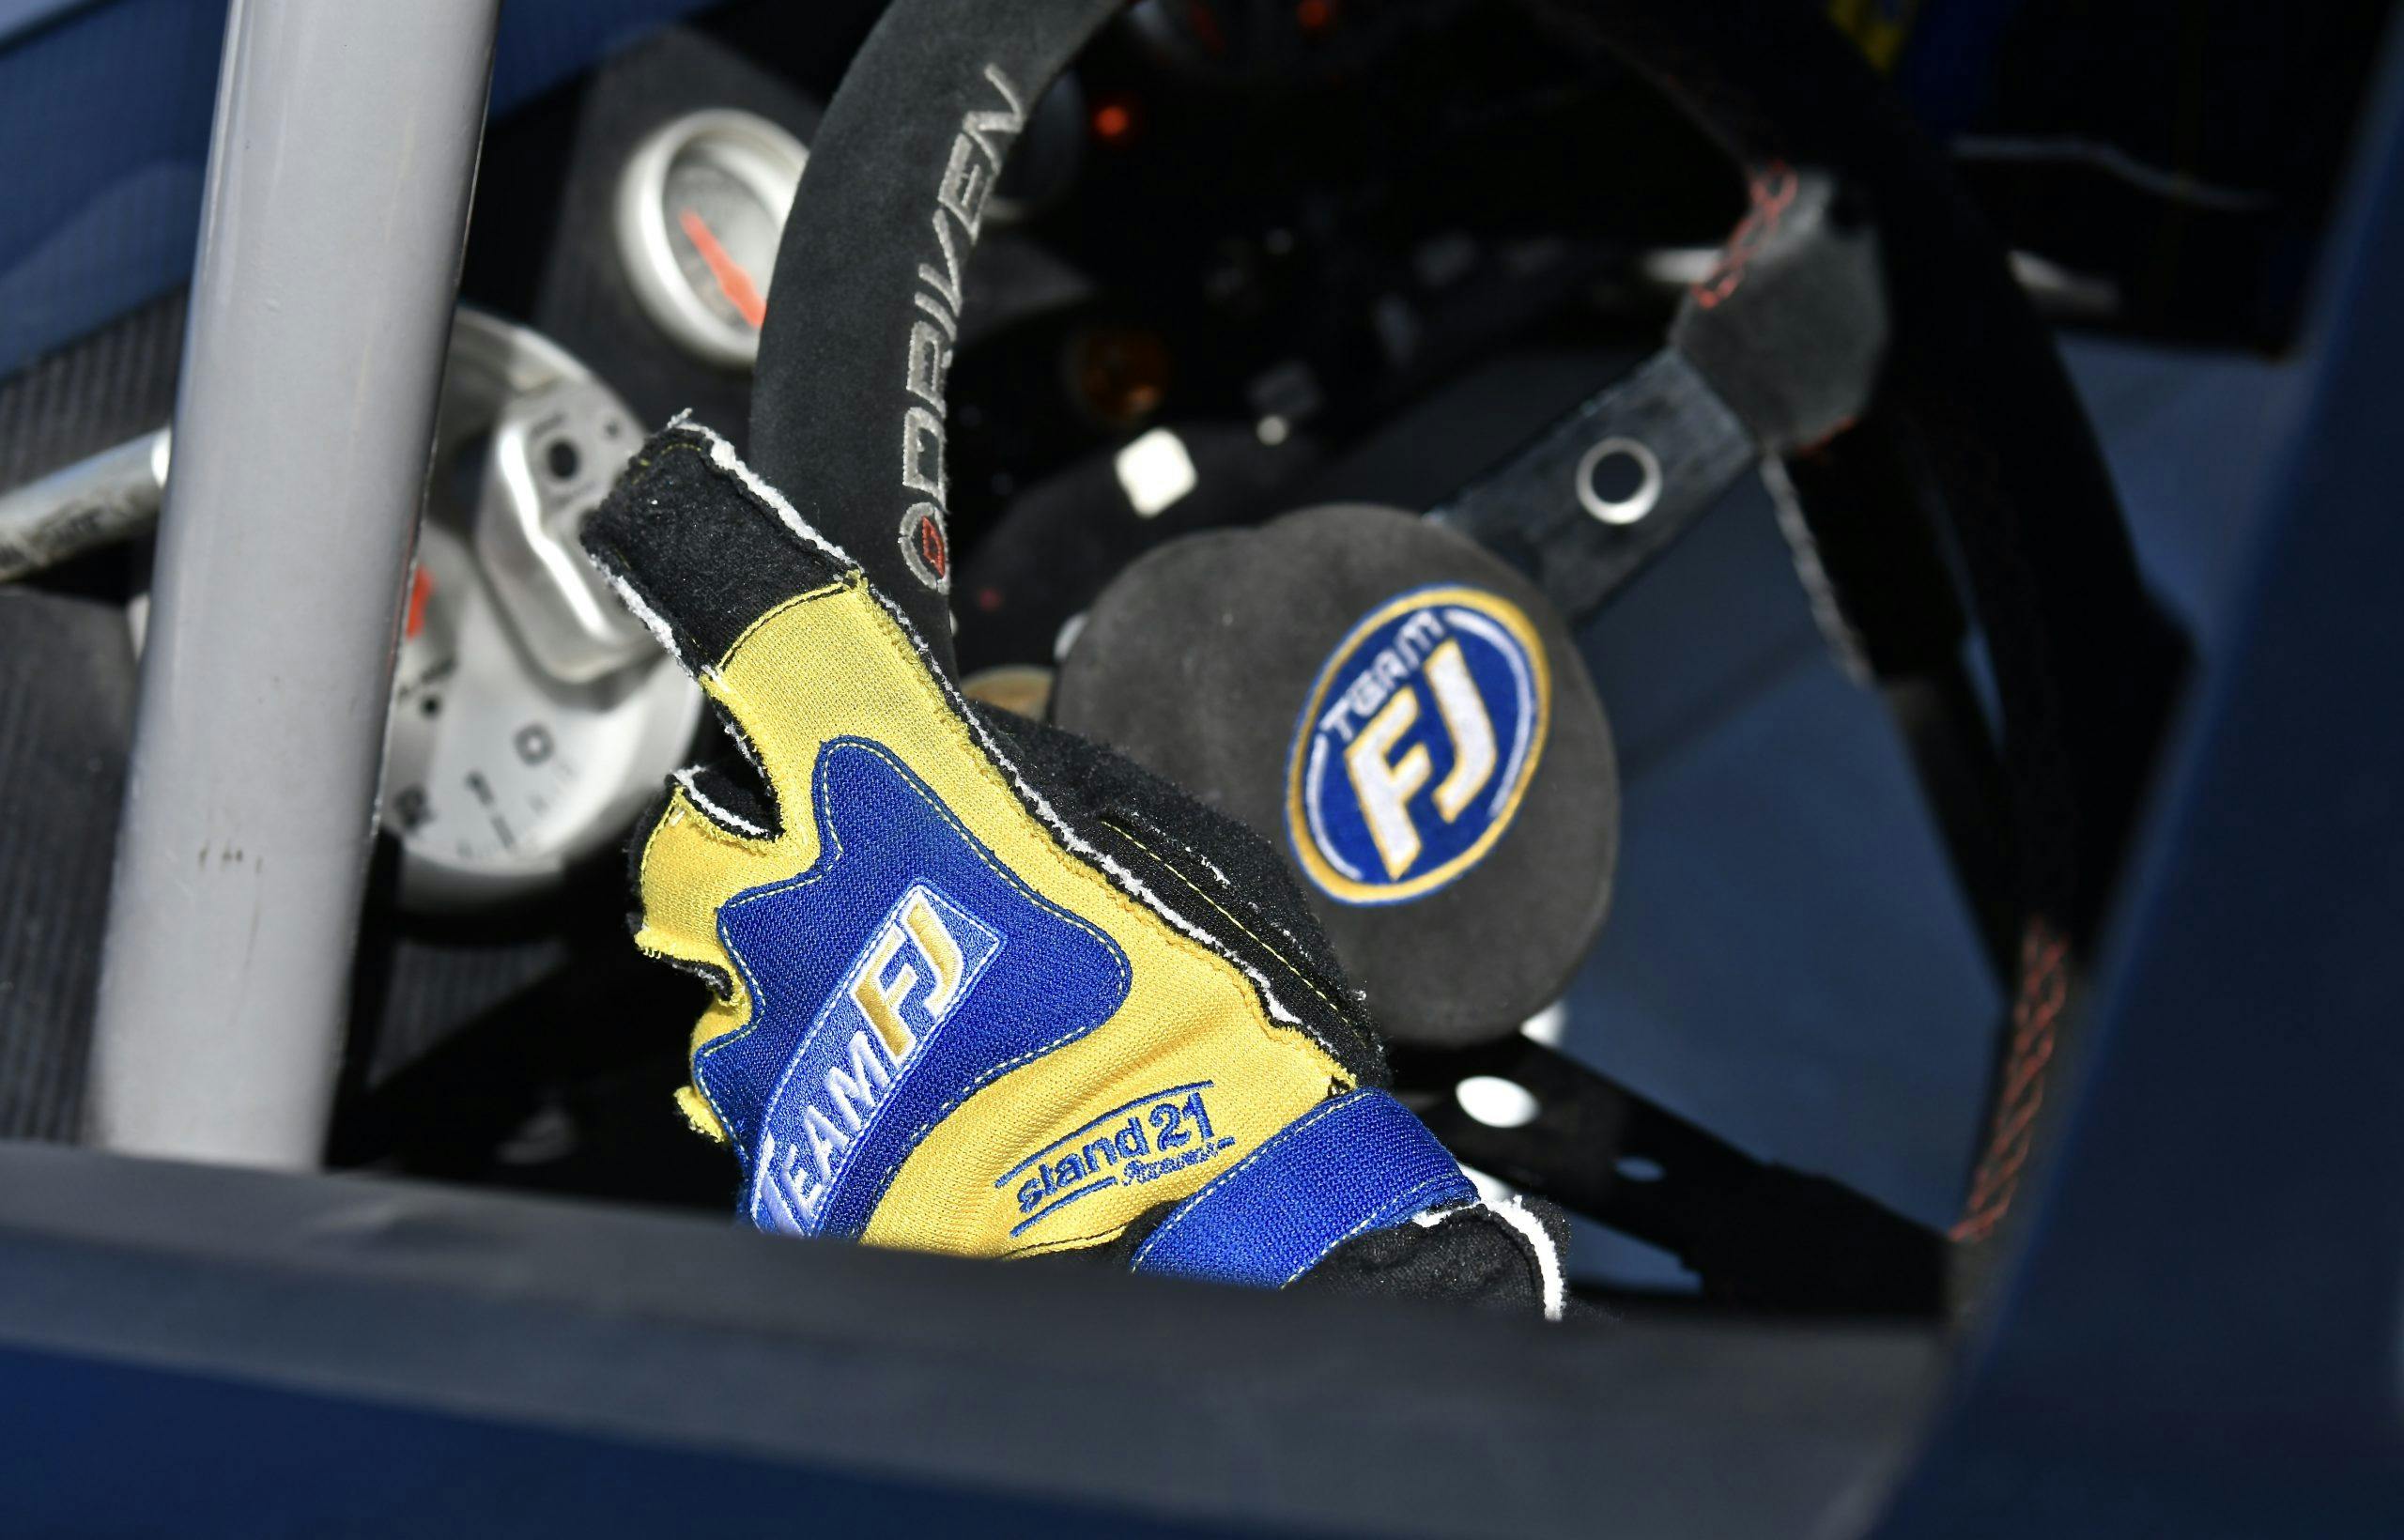 NASCAR on ice wheel and glove